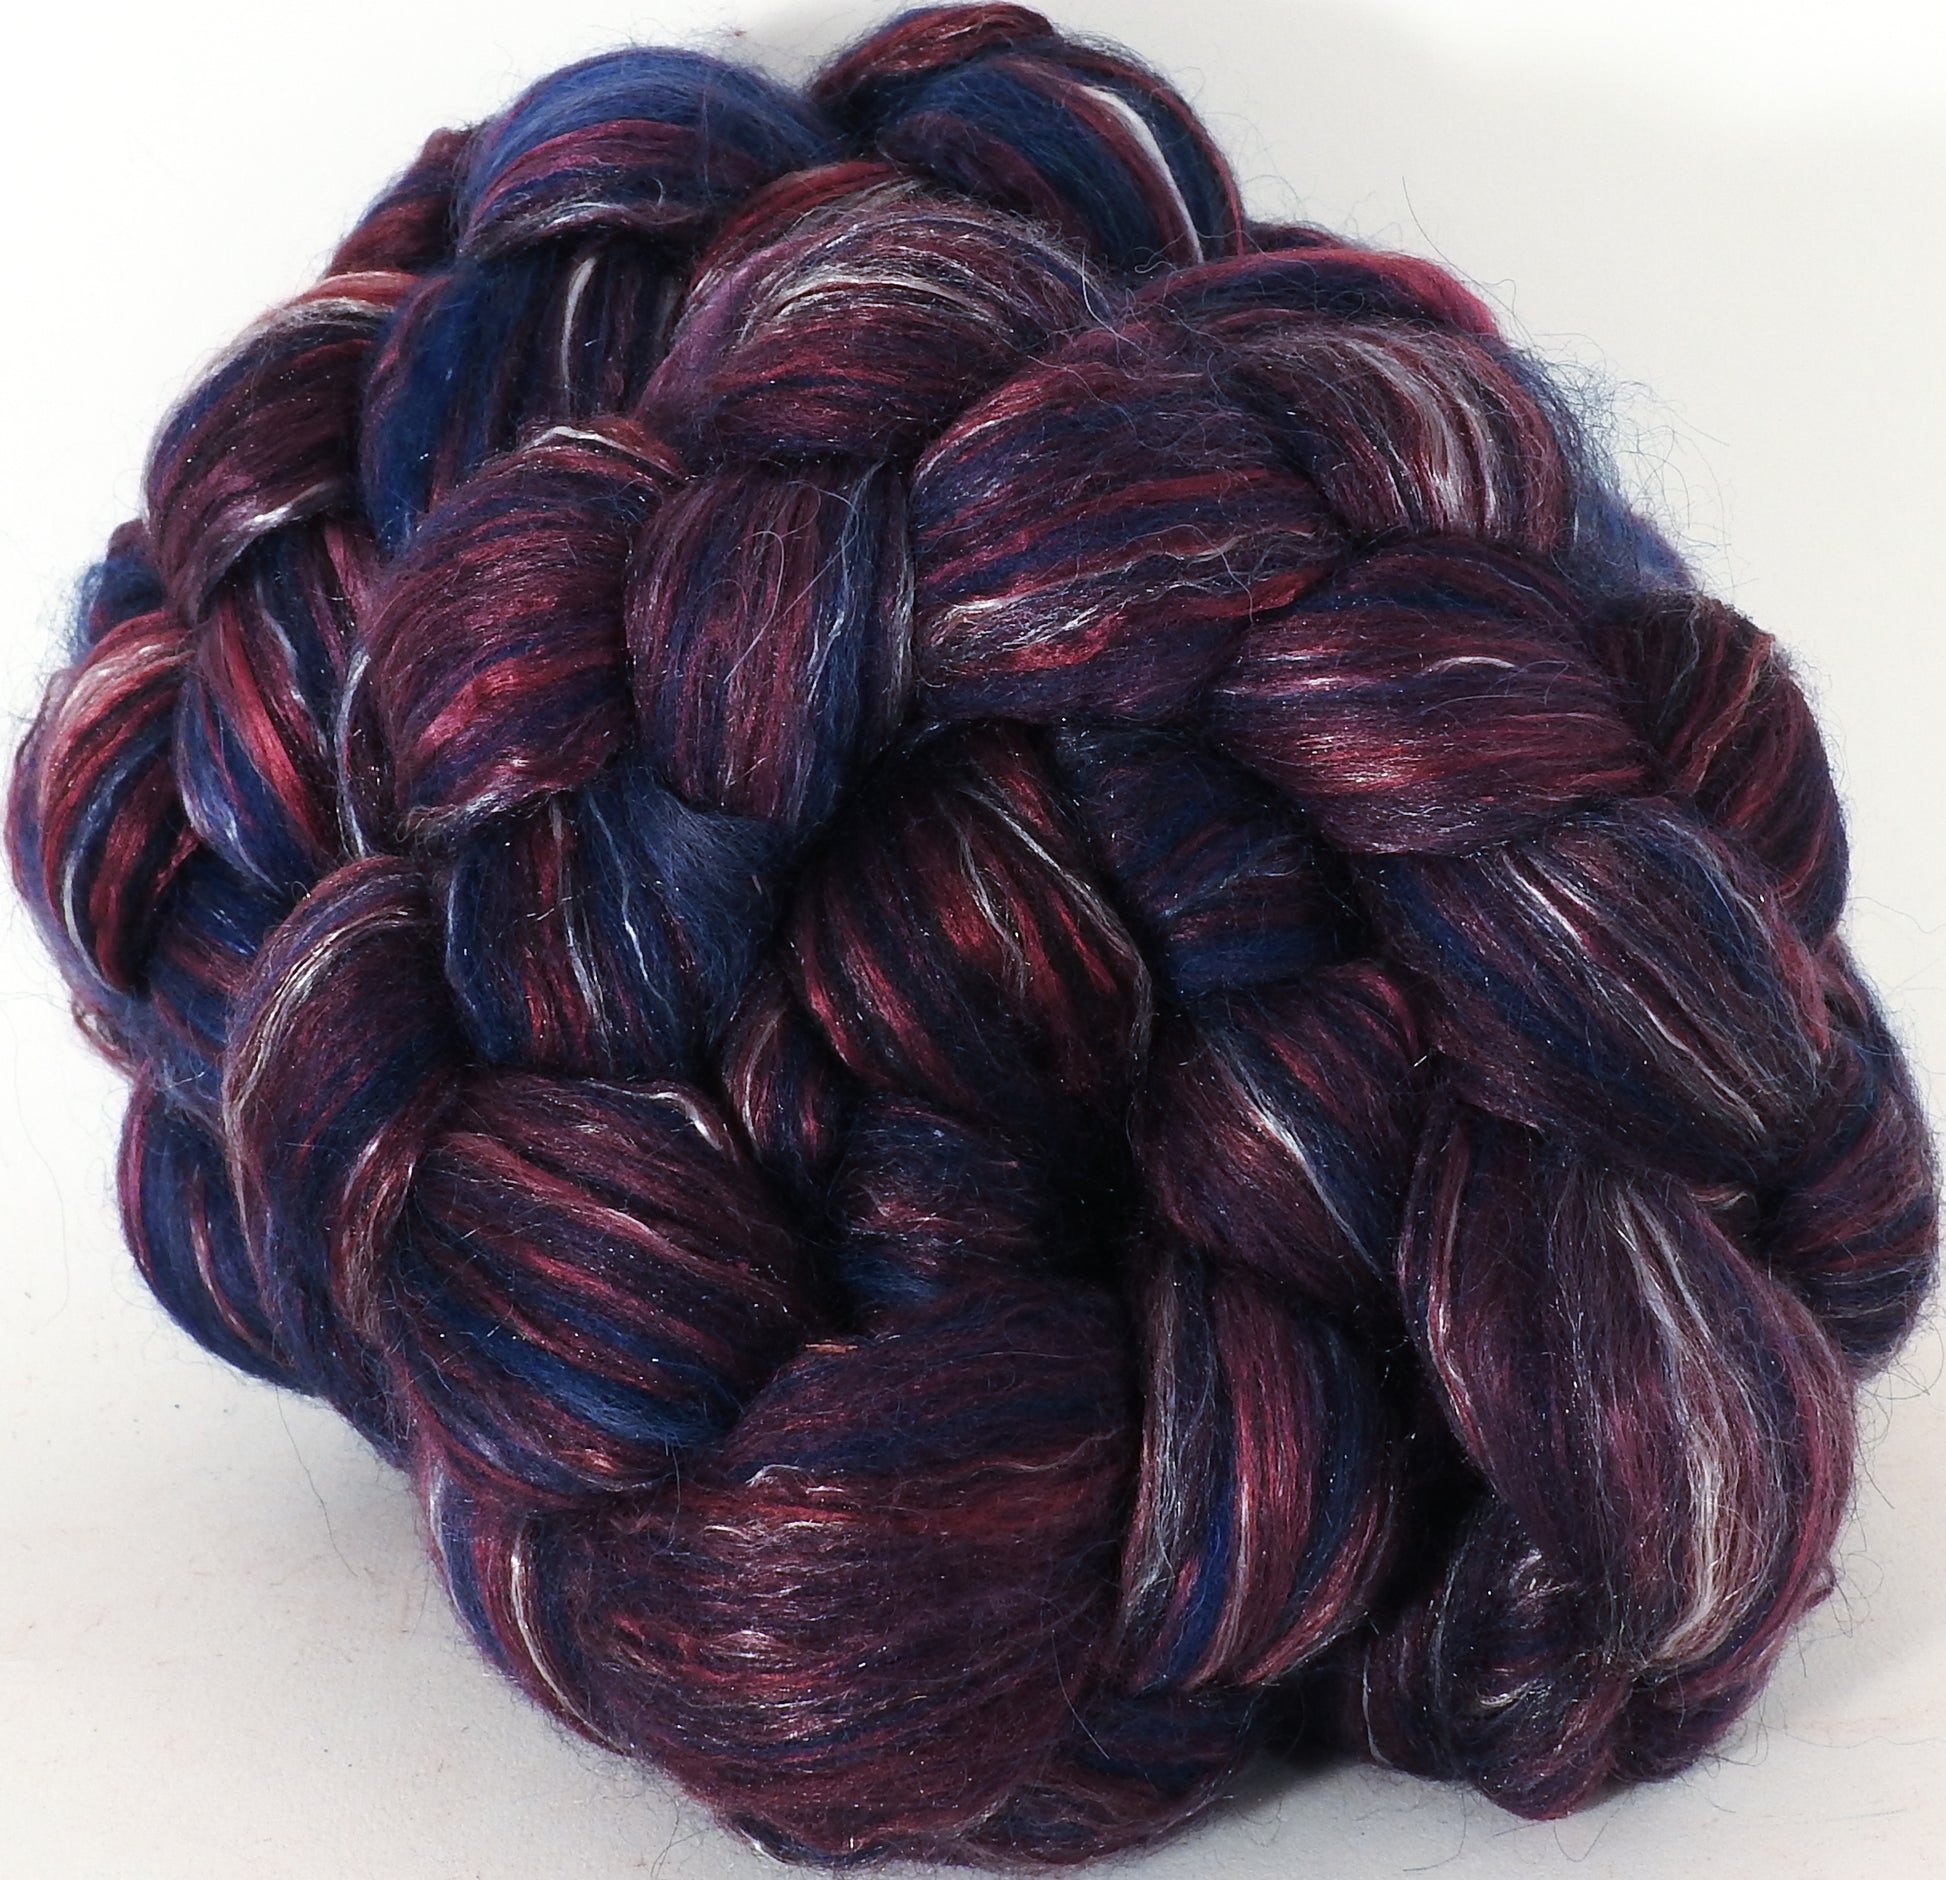 Hand-dyed wensleydale/ mulberry silk roving ( 65/35) -Banshee - Inglenook Fibers